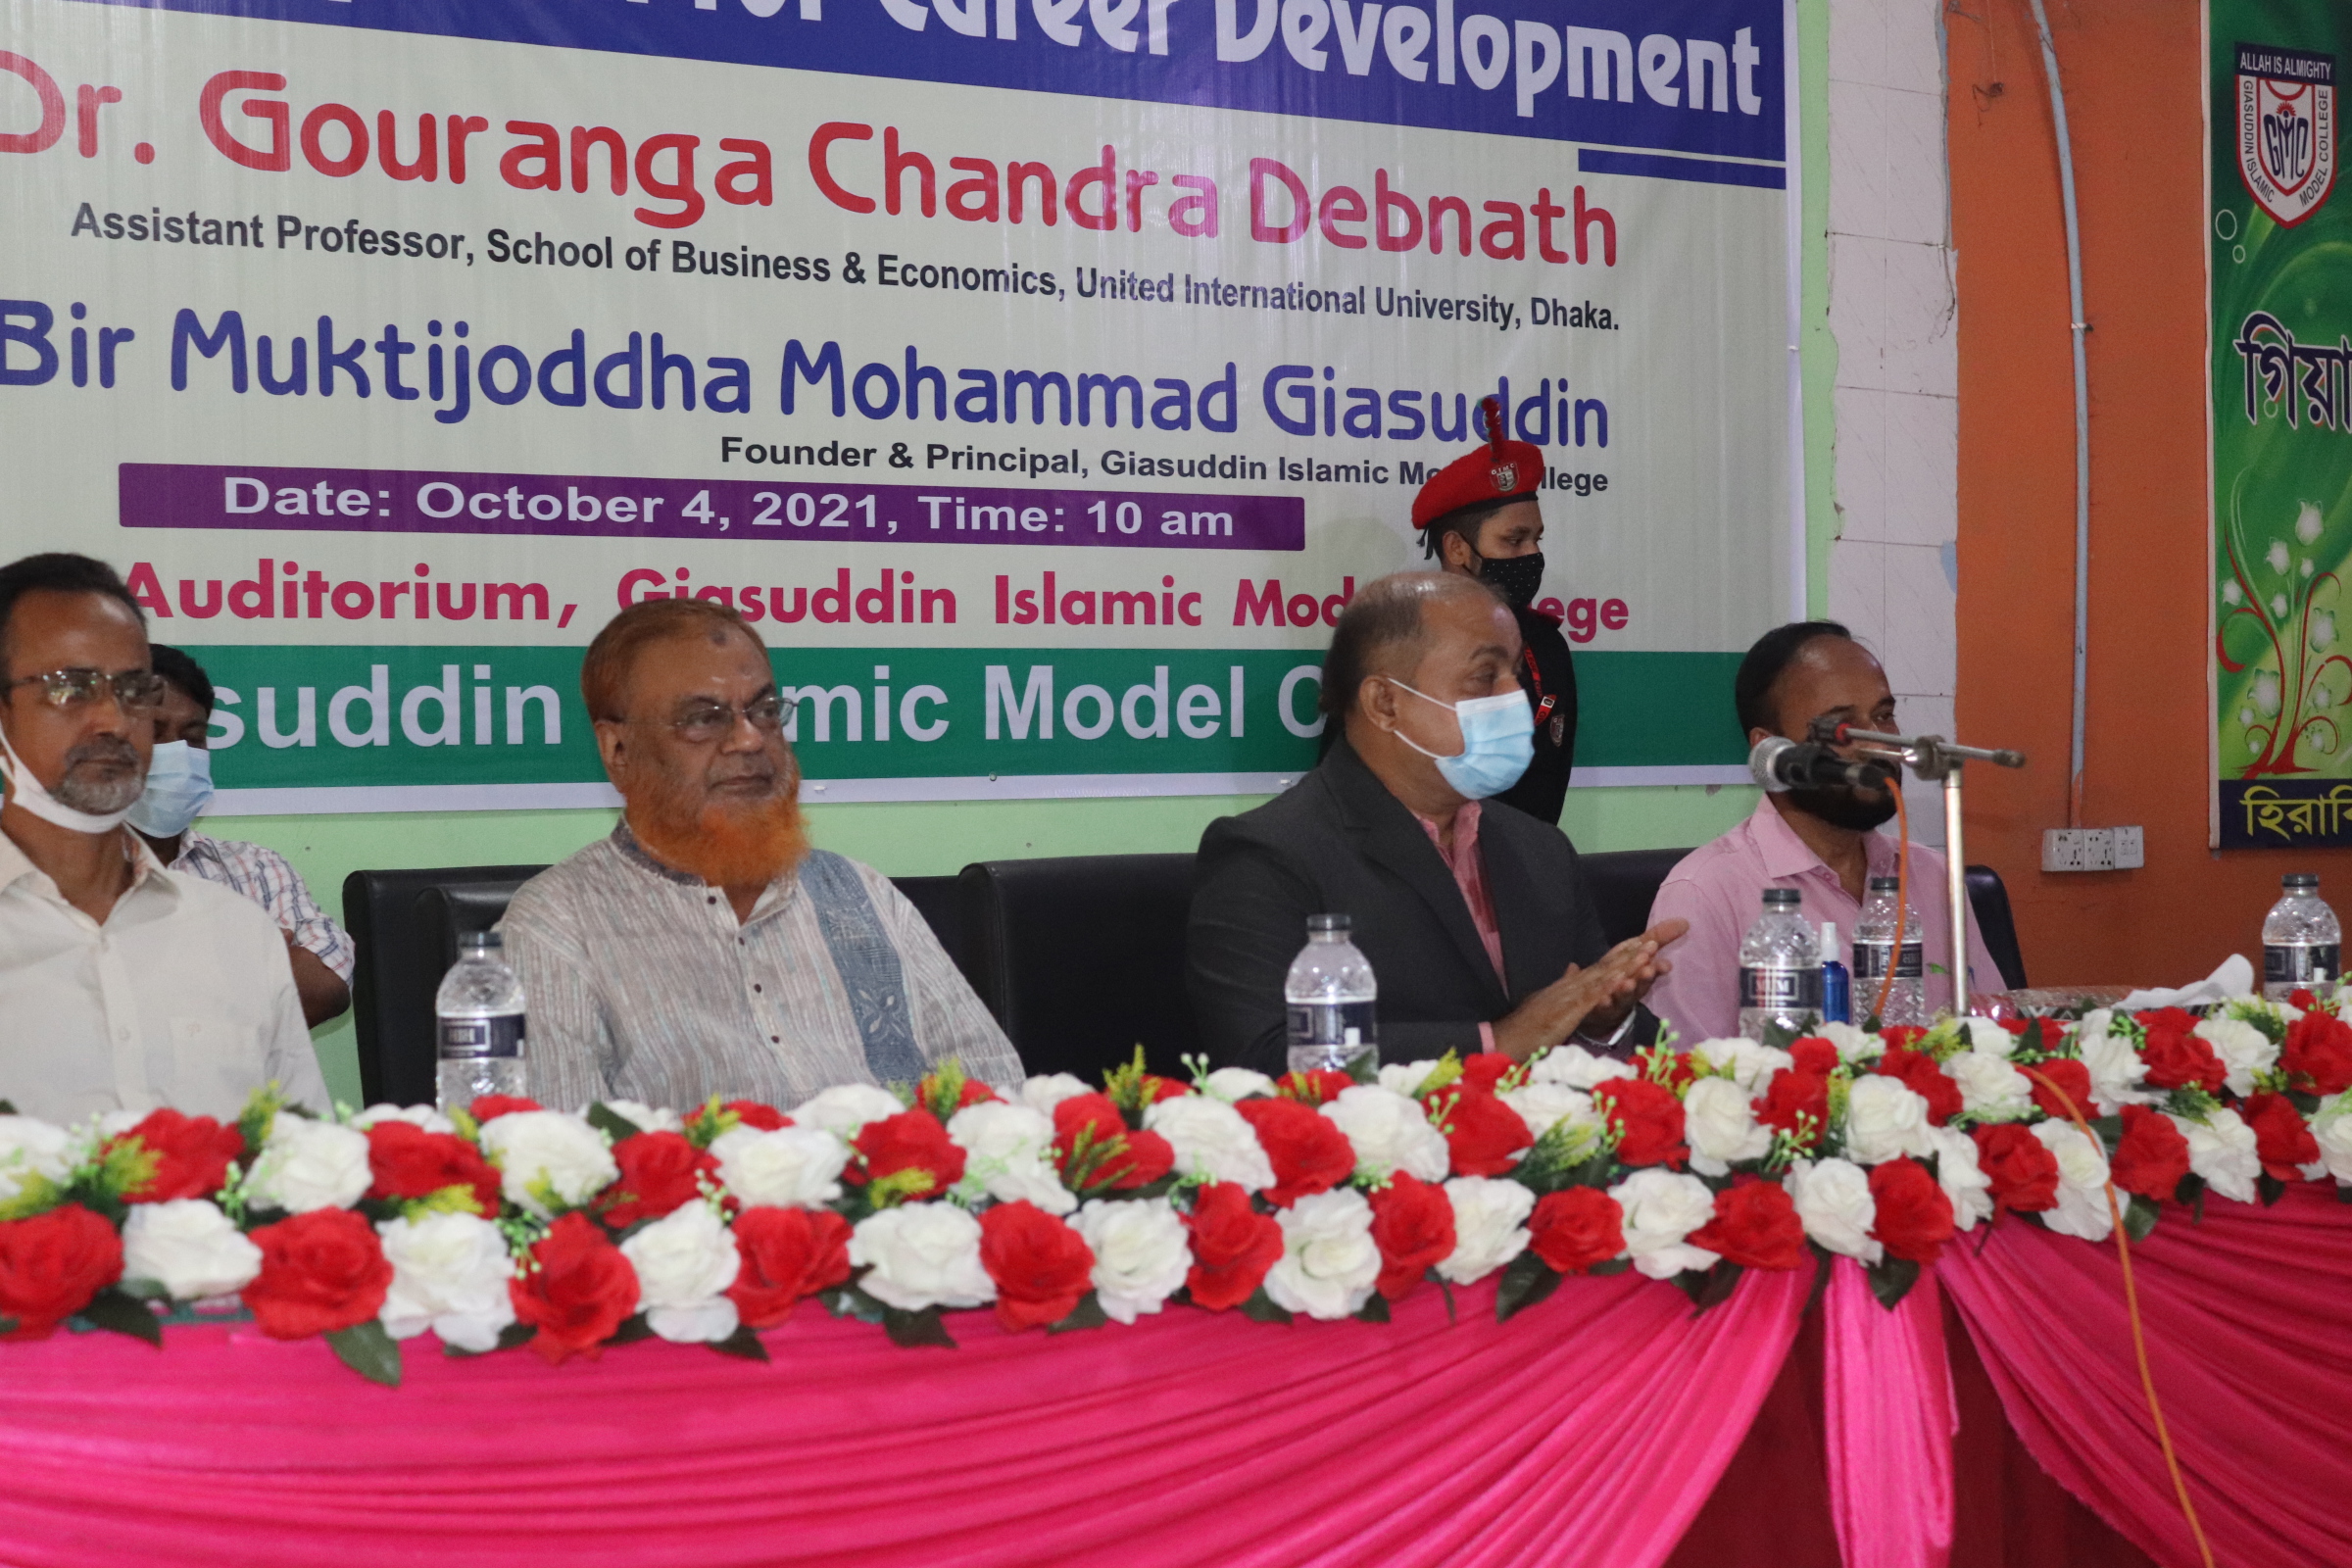 Motivational Speech (Dr. Gourango)  - Giasuddin Islamic Model College